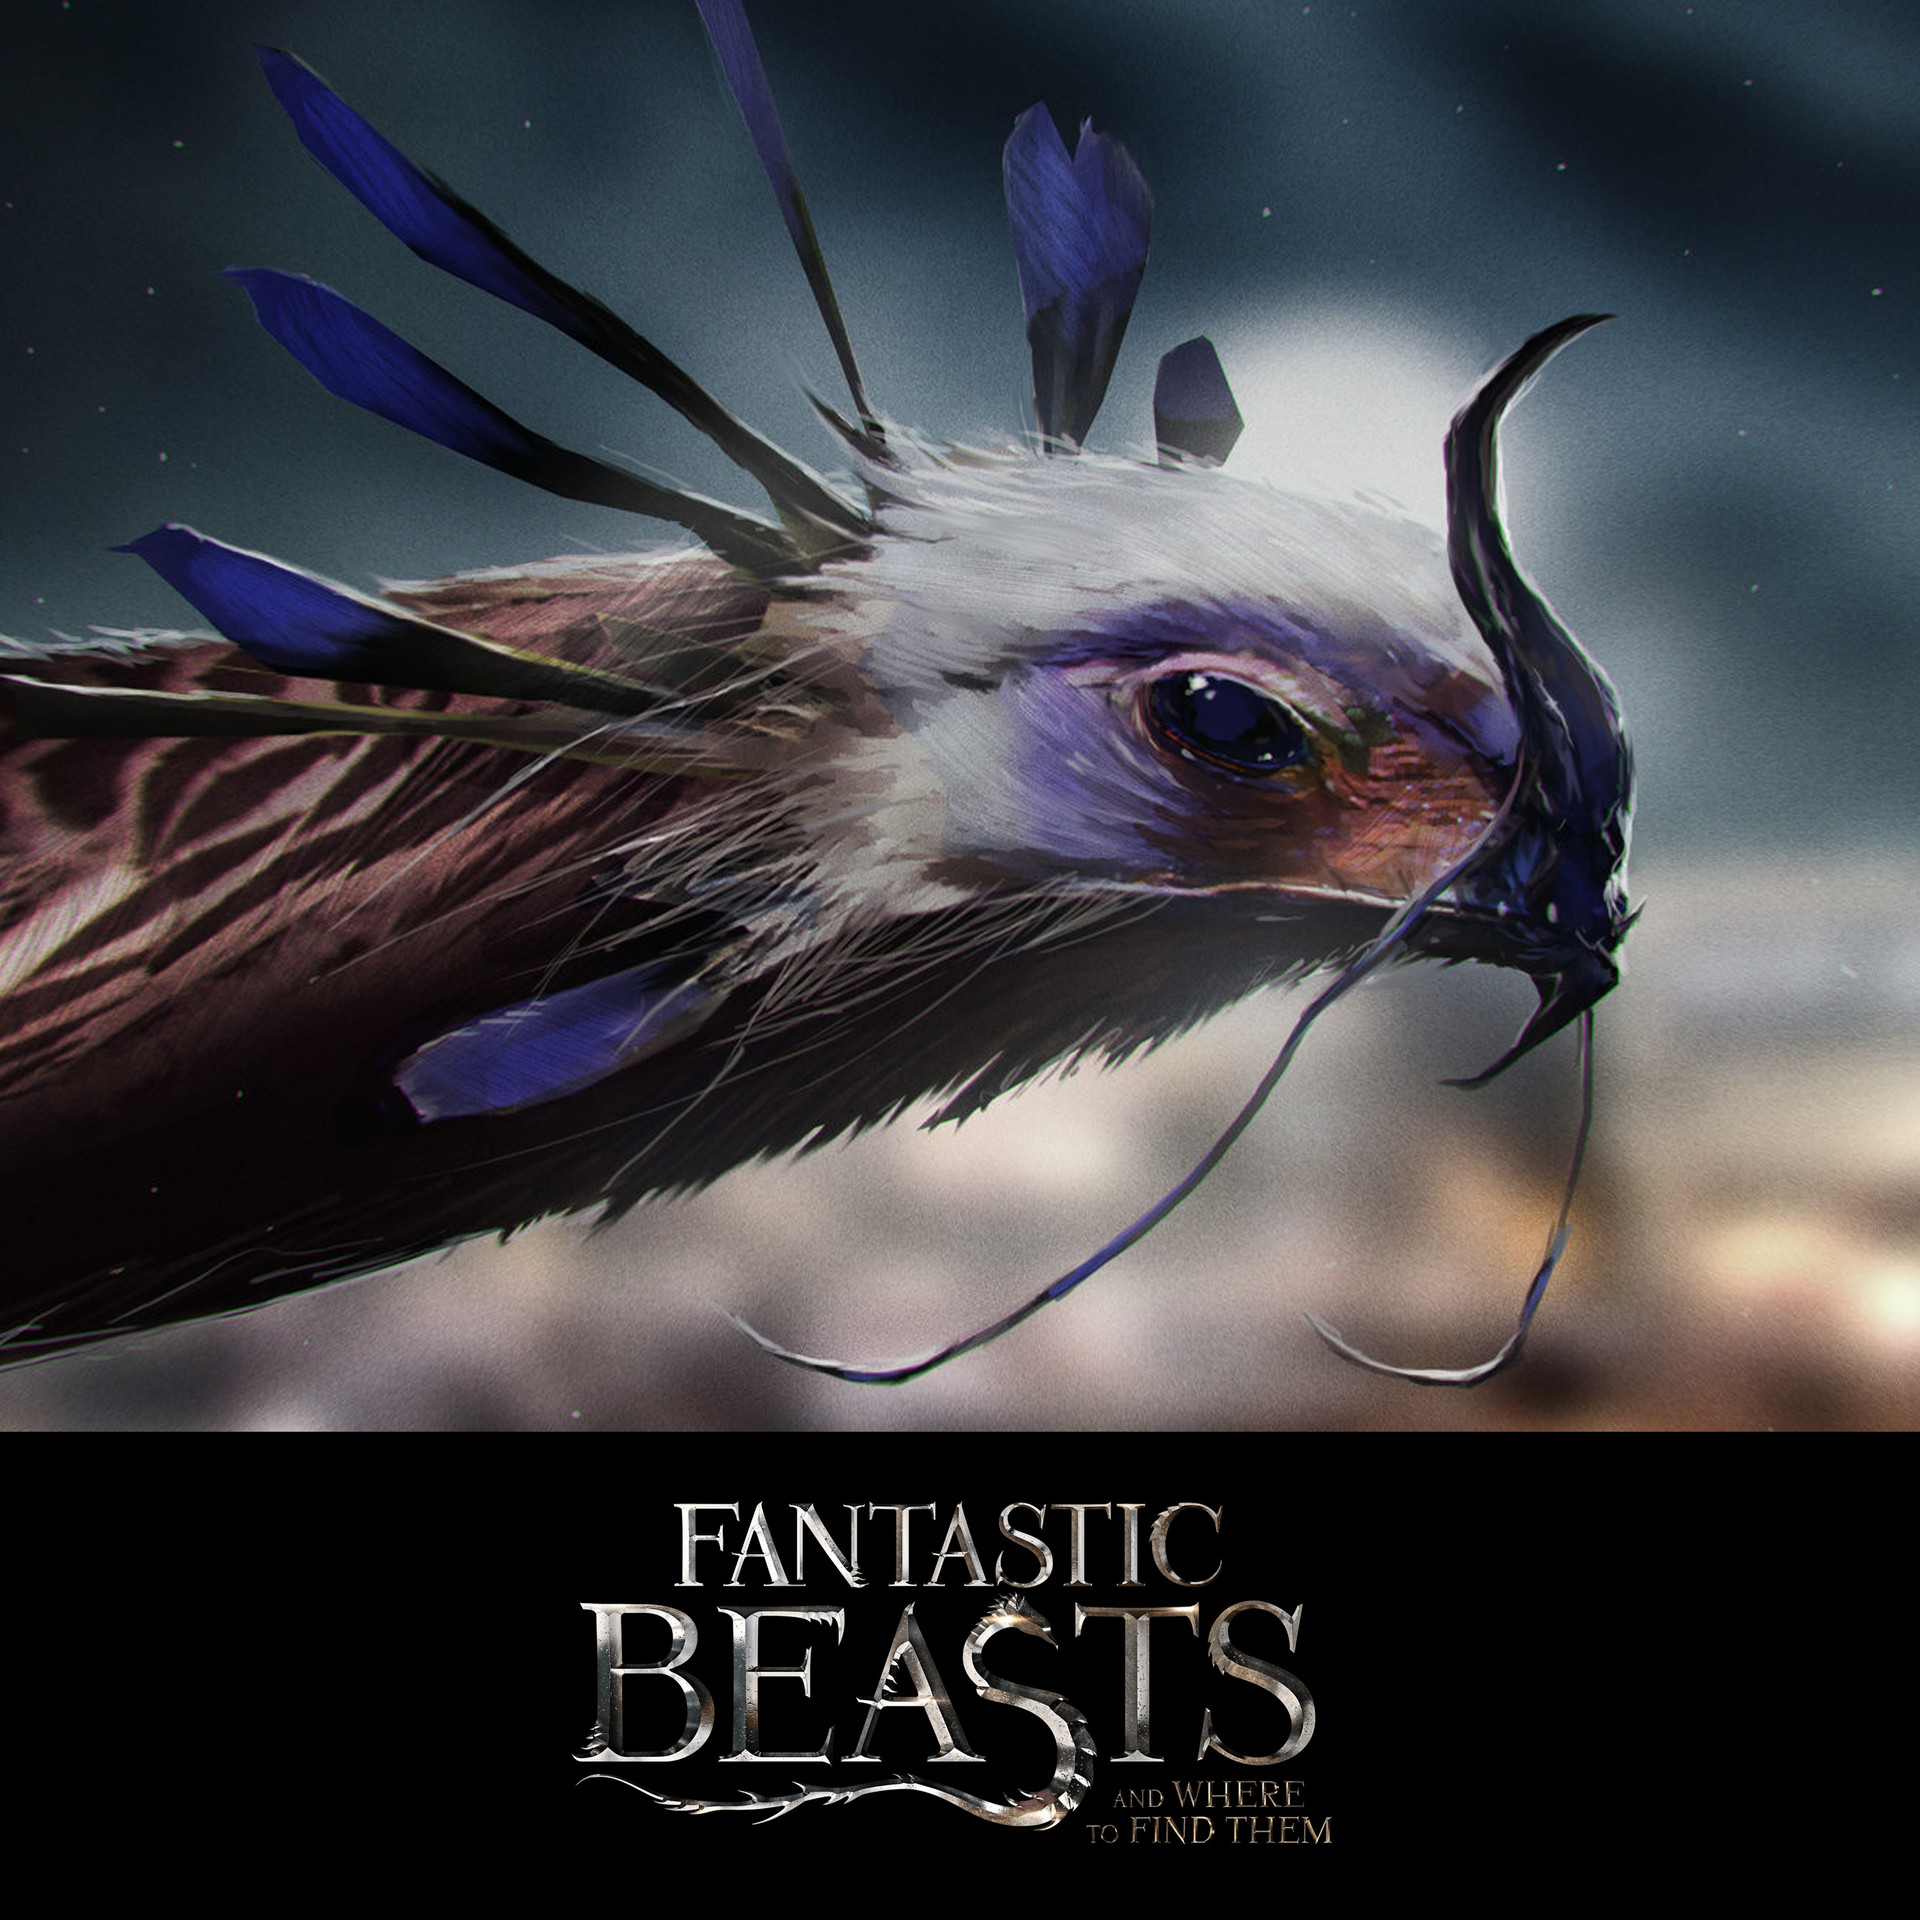 Fantastic Beasts' Legend